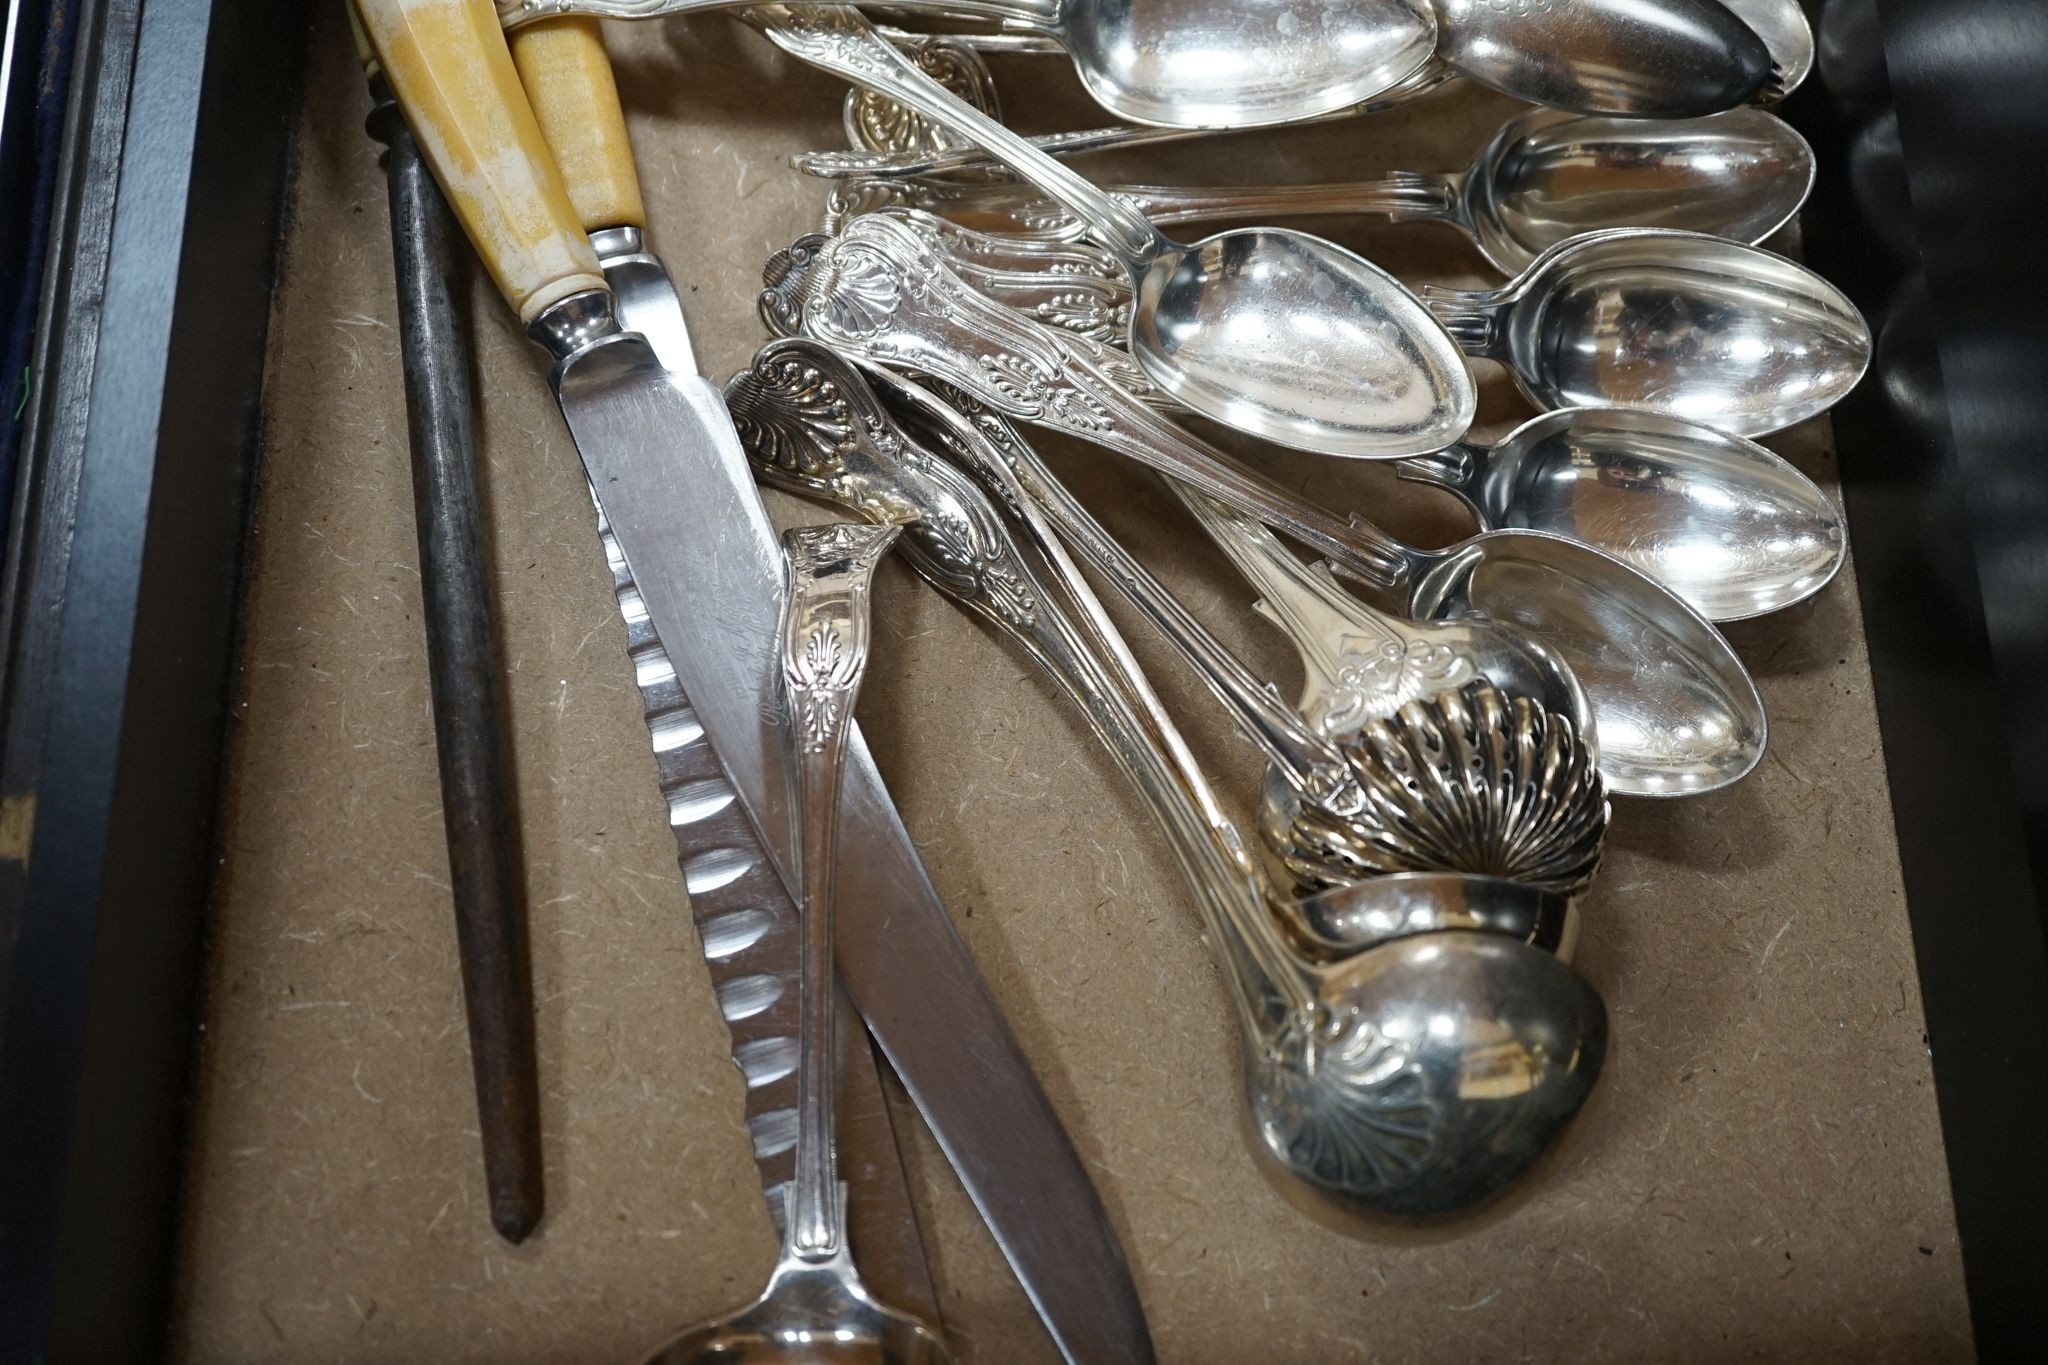 An extensive silver plated cutlery set